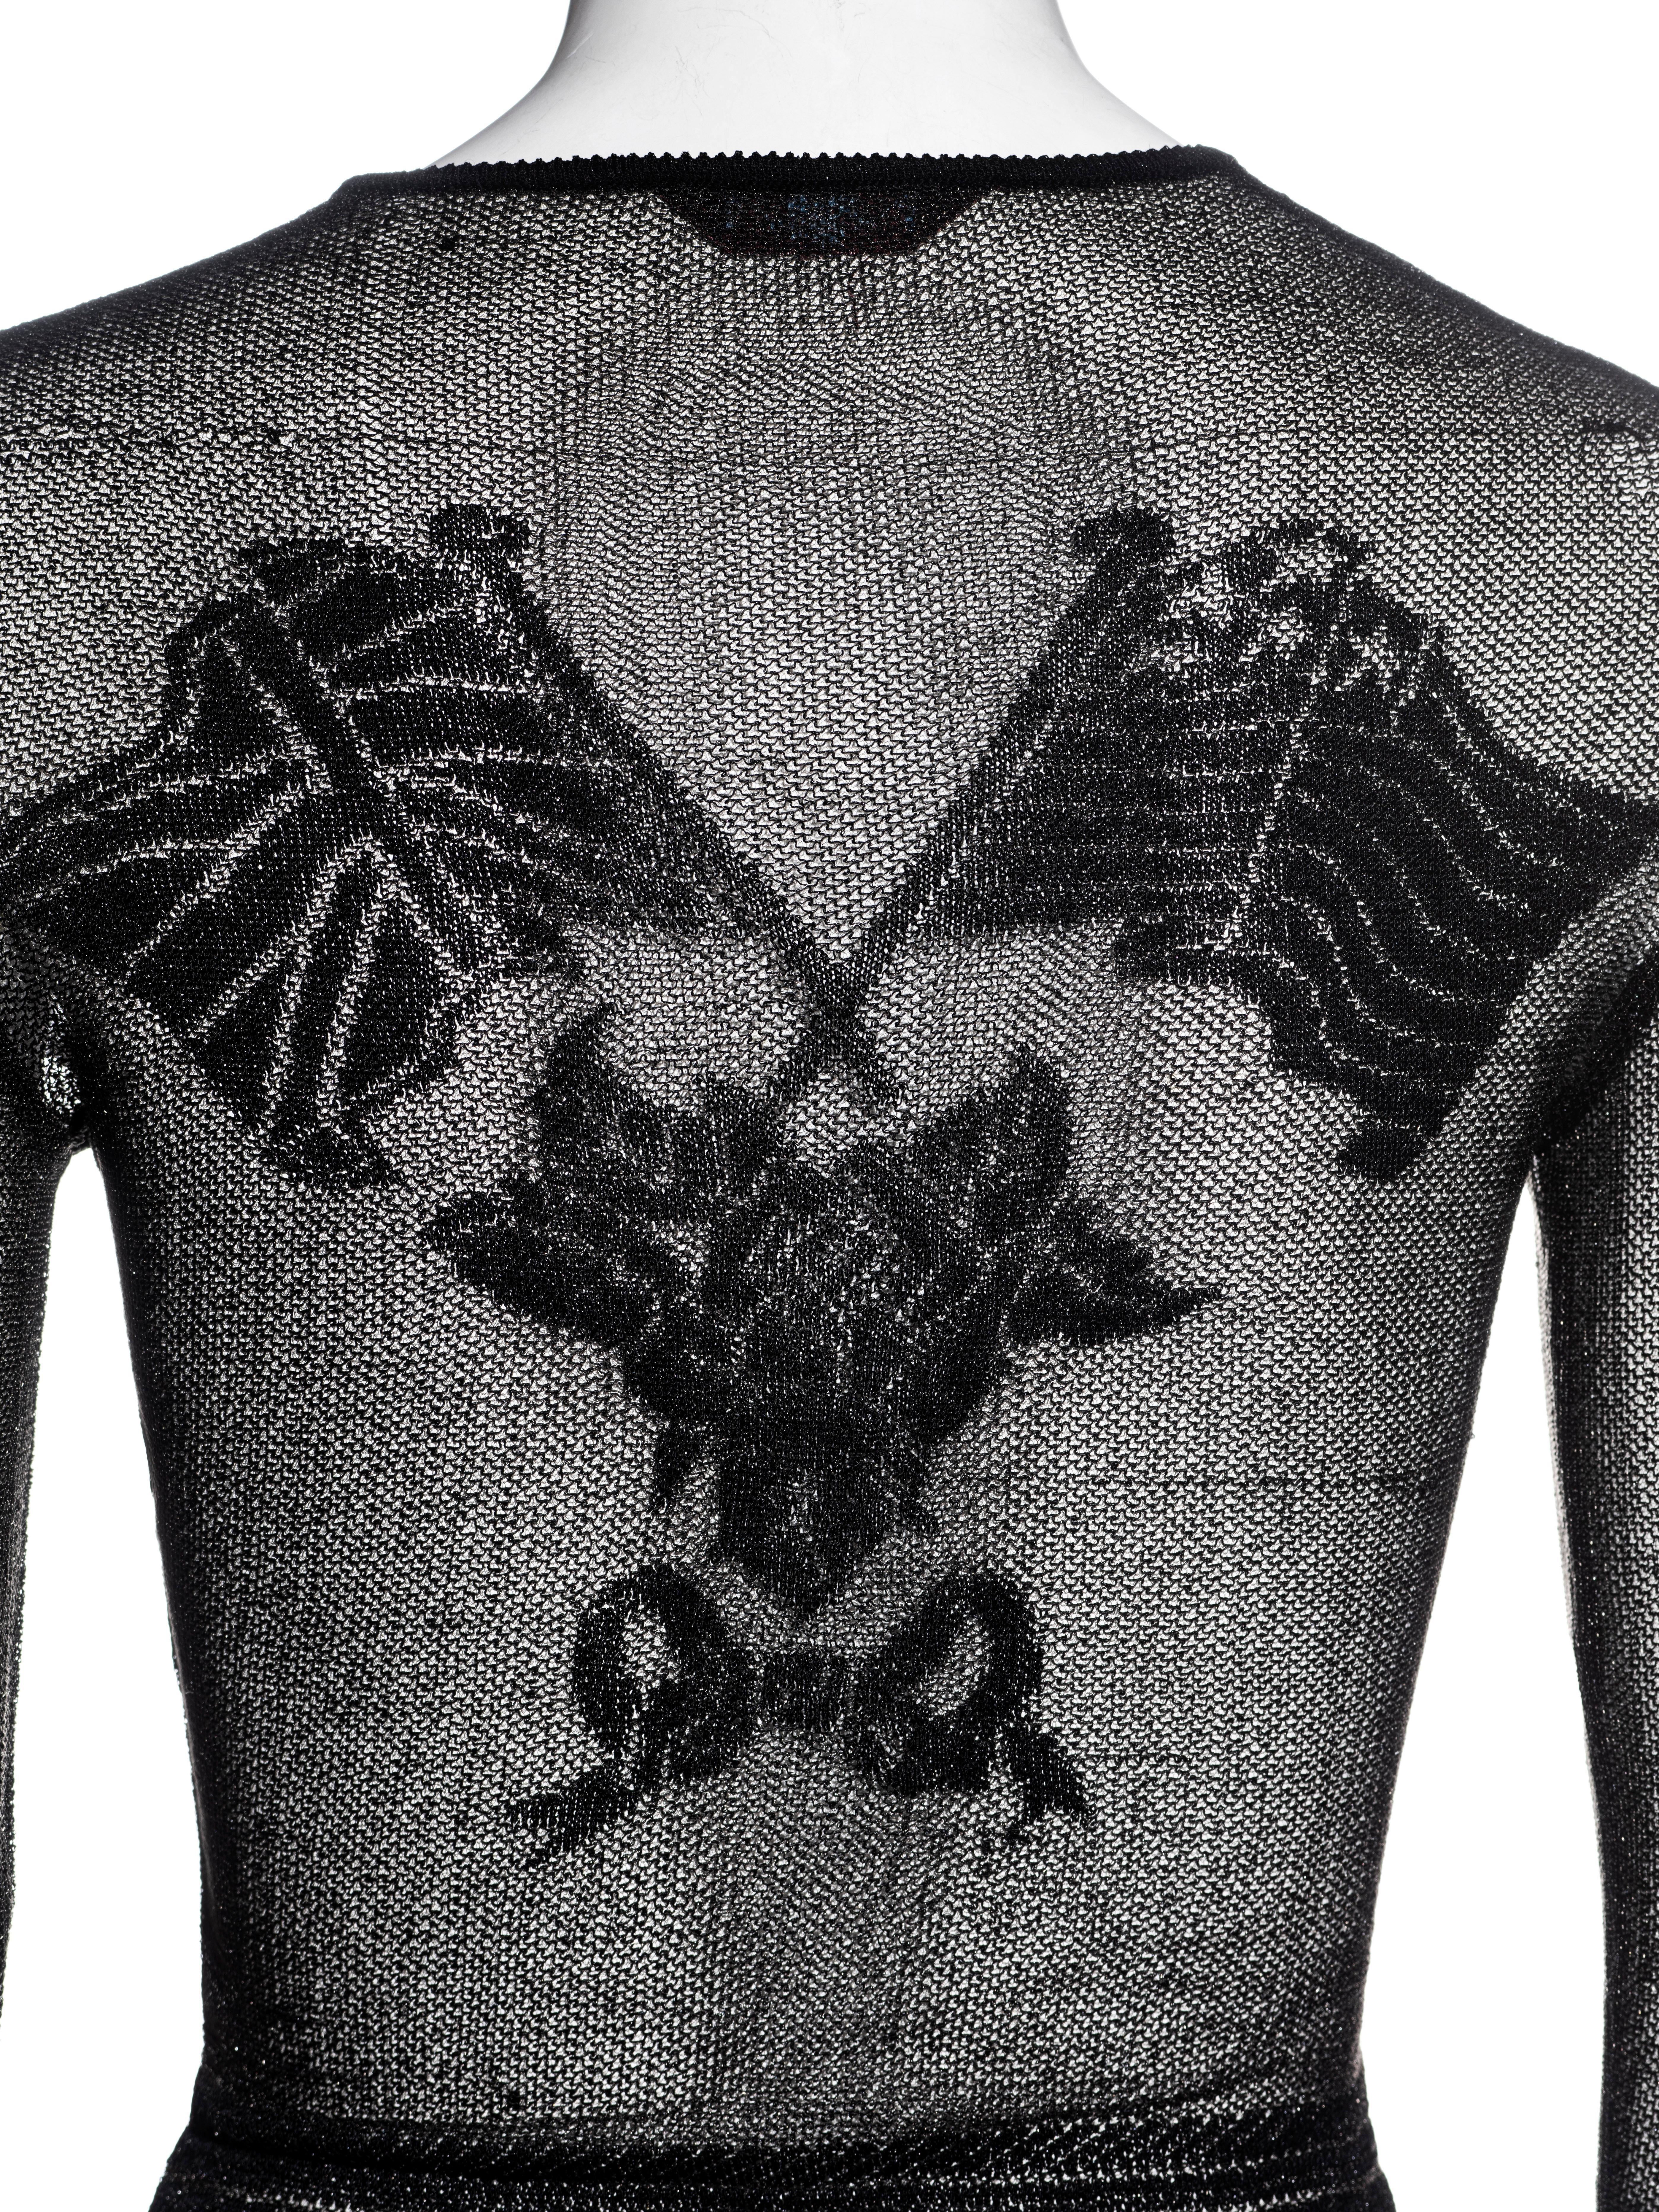 John Galliano black sheer knit tattoo top, fw 1997 6